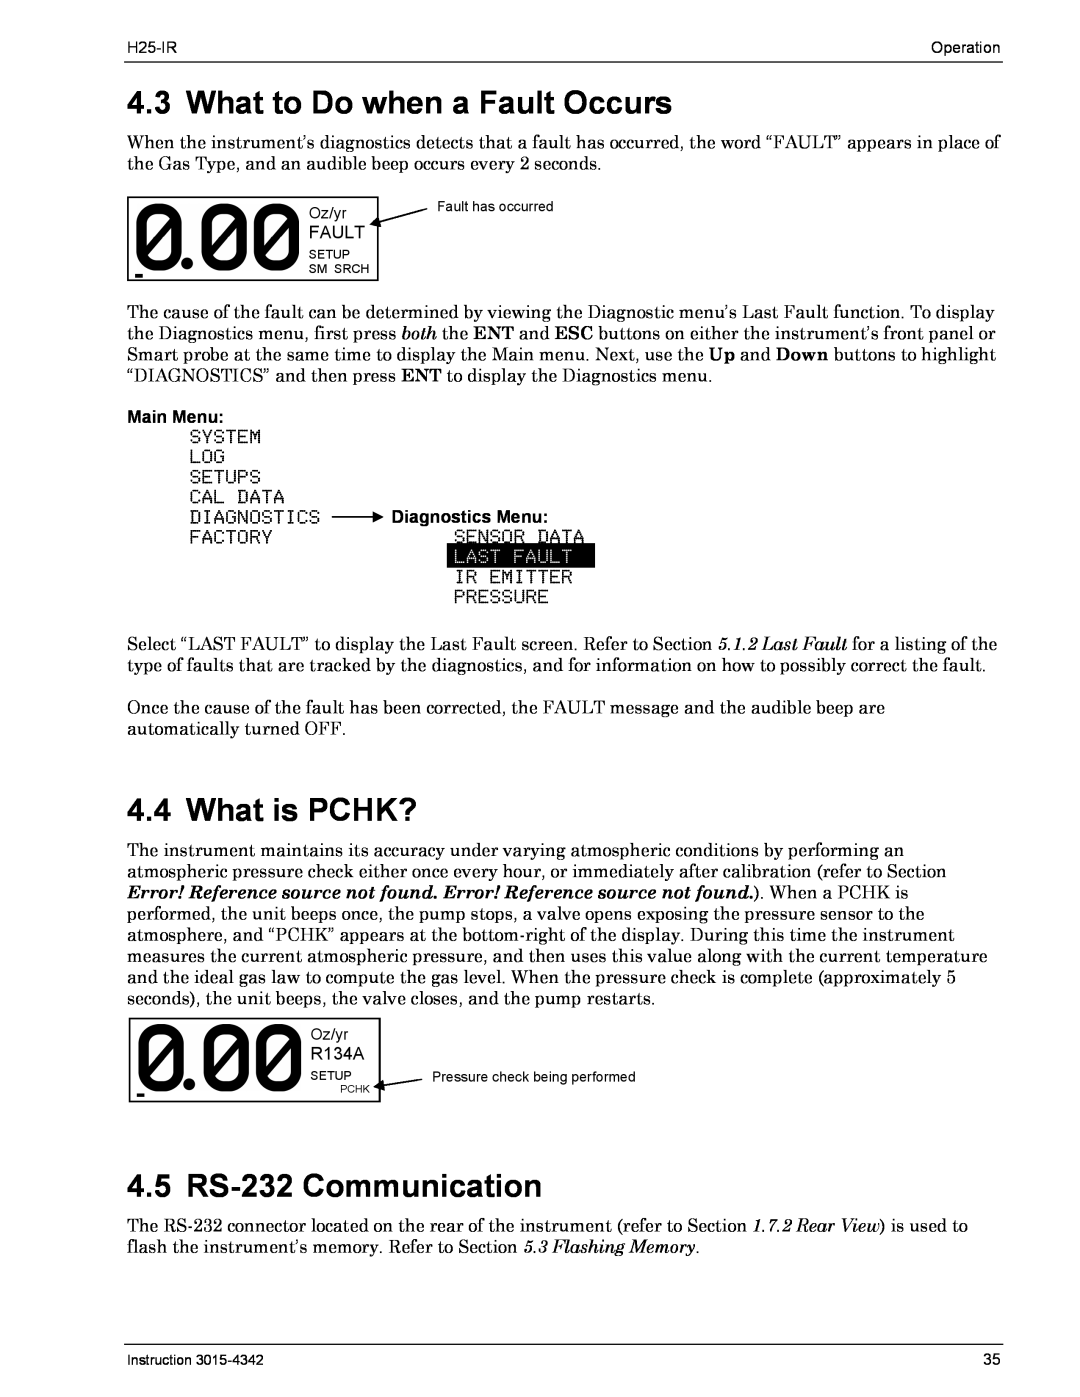 Bacharach H25-IR manual What to Do when a Fault Occurs, What is PCHK?, 4.5 RS-232Communication, Main Menu, Diagnostics Menu 